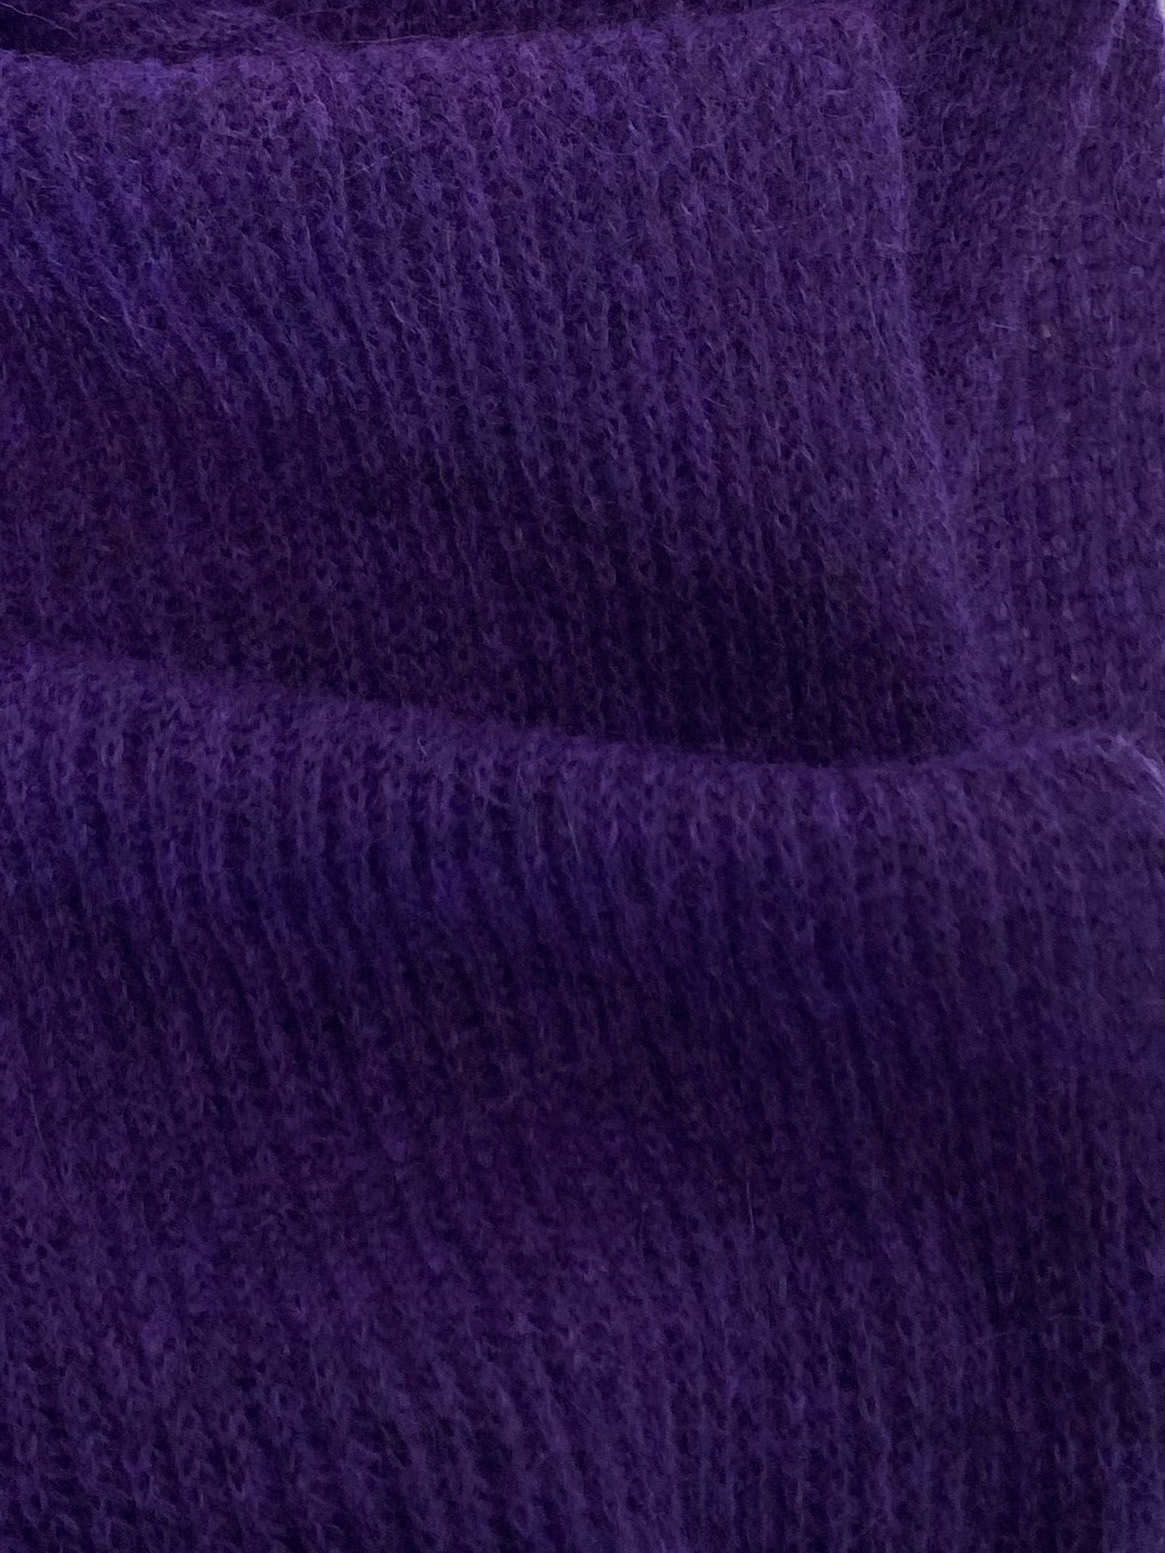 Cosy Lovely Purple